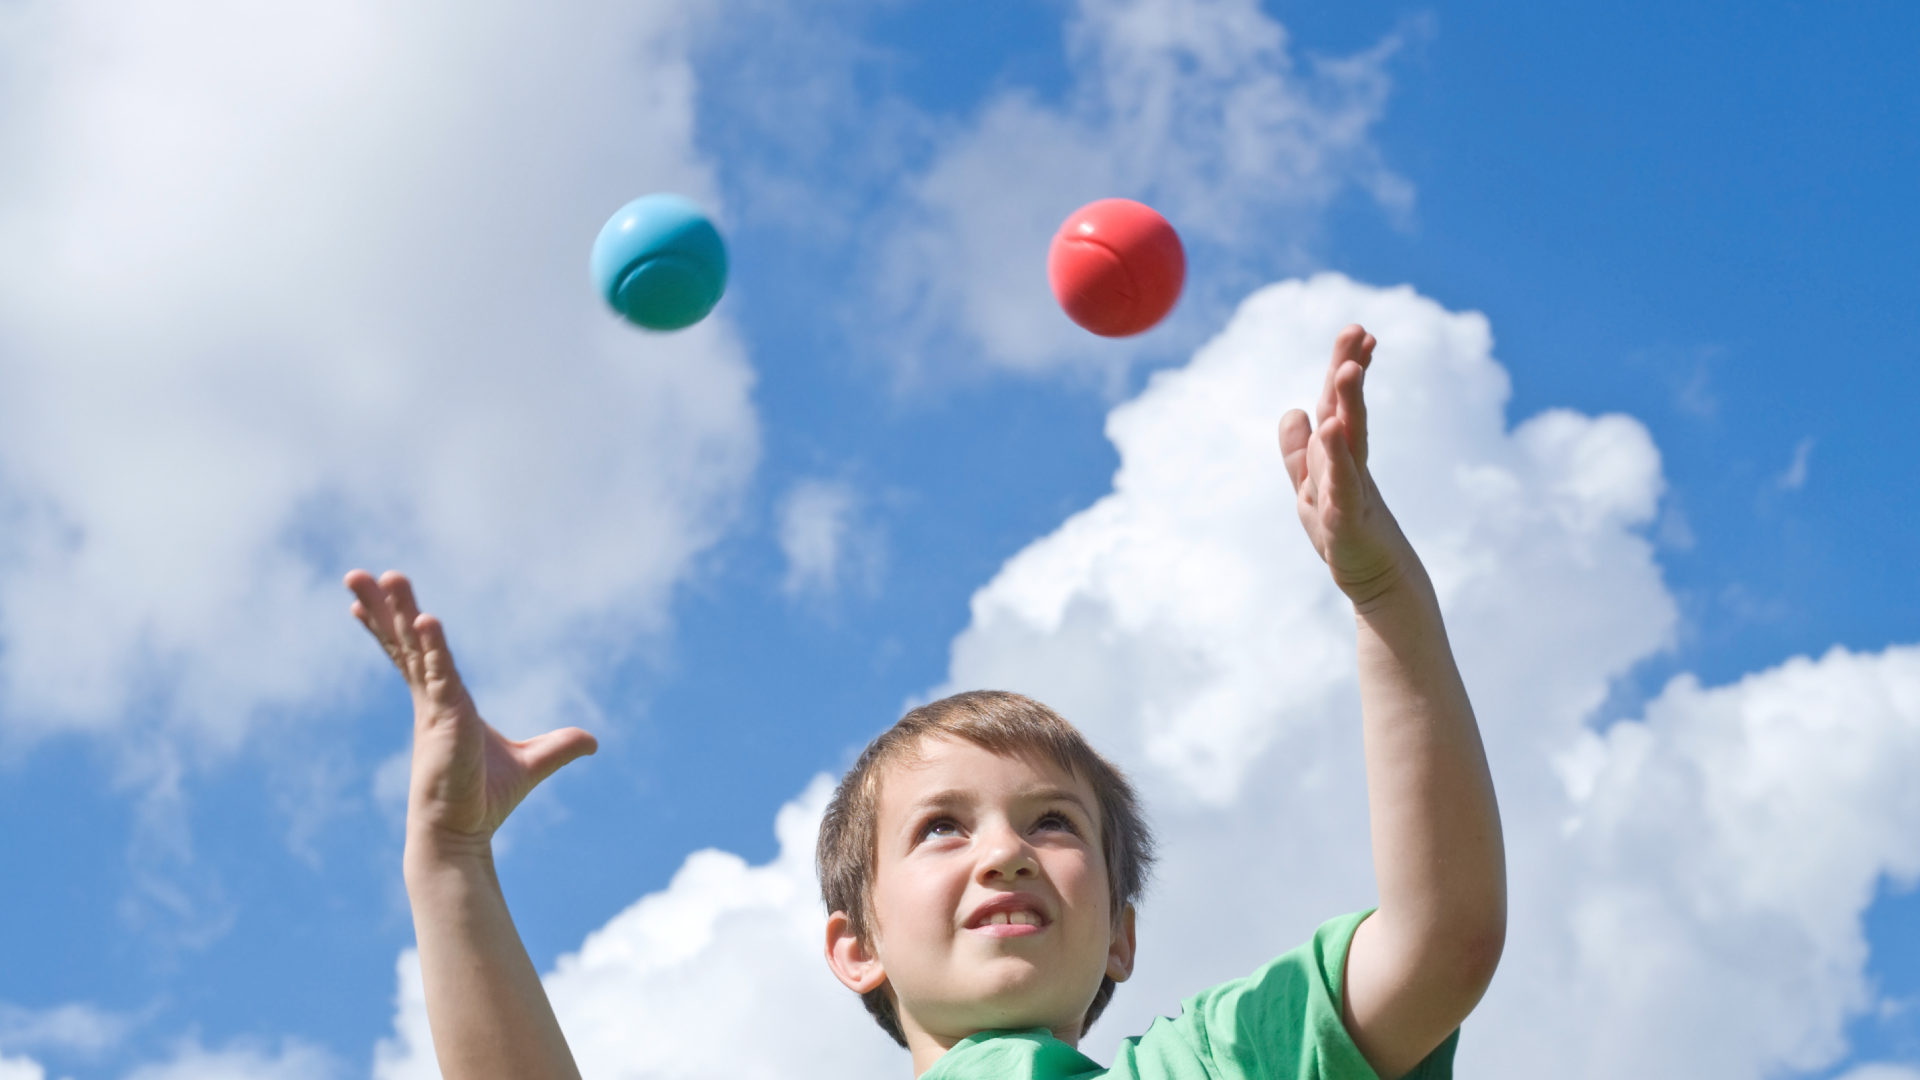 child juggling balls against a blue sky